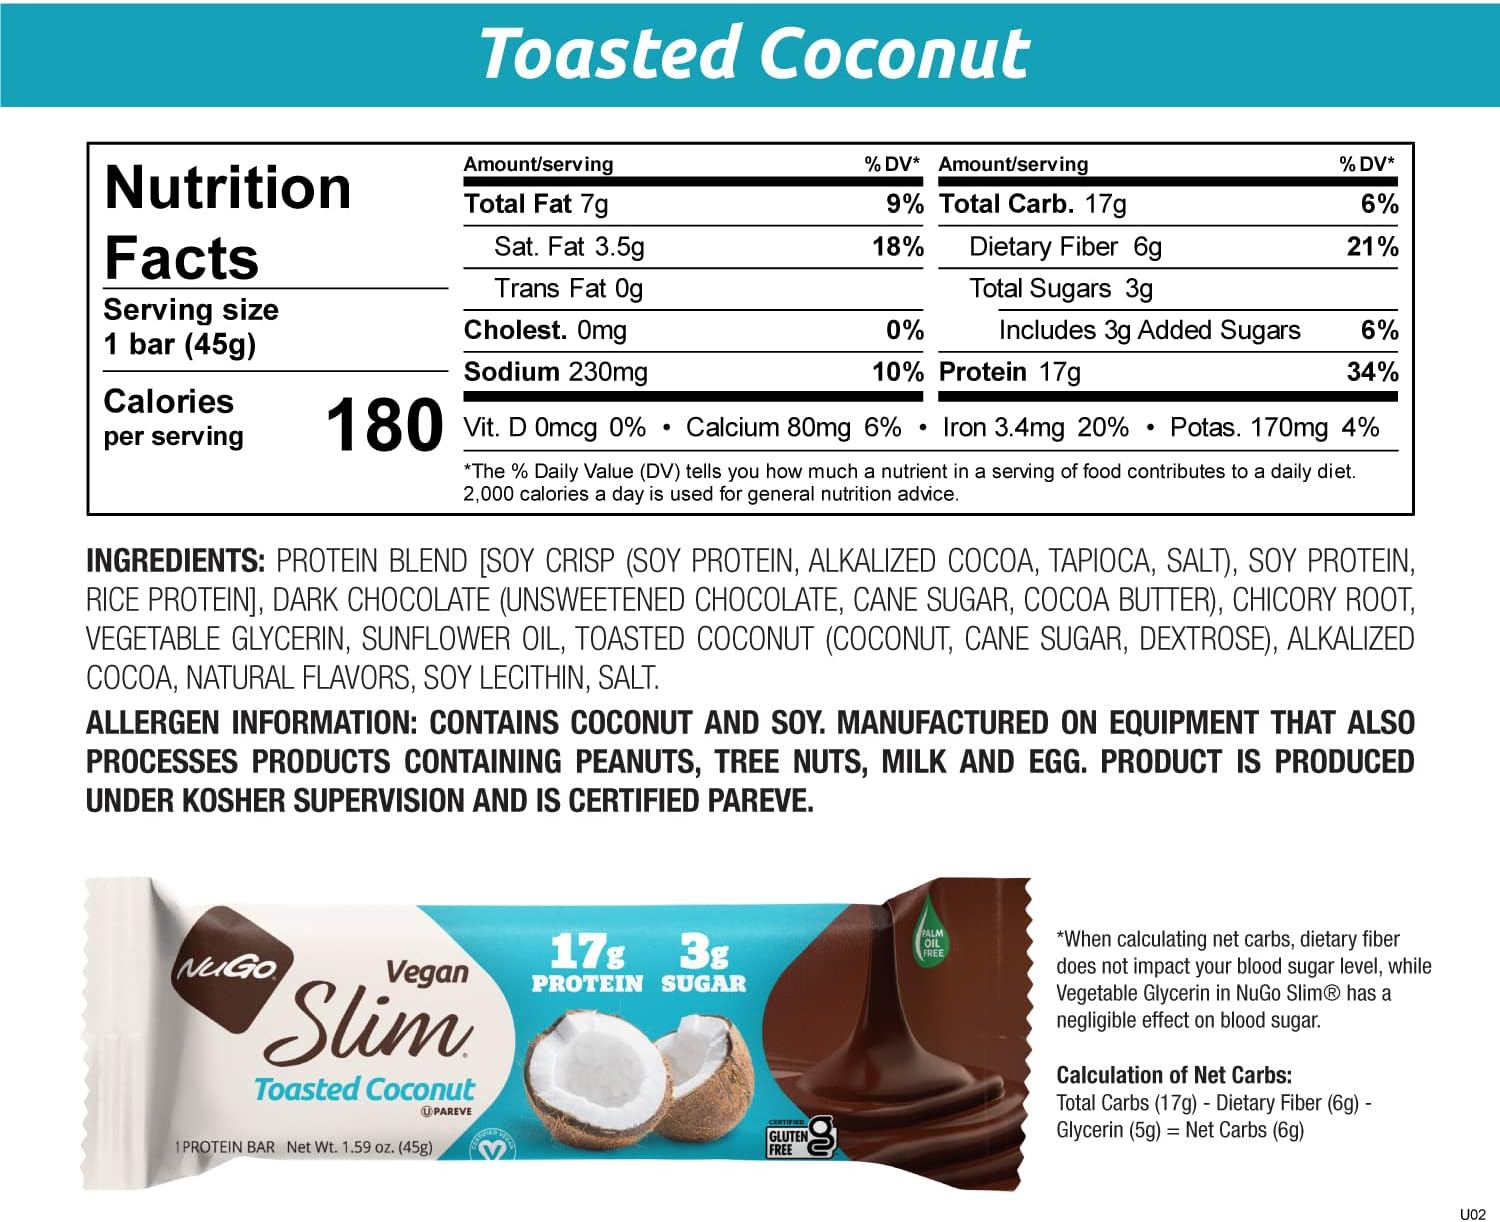 NuGo Slim Dark Chocolate Toasted Coconut, 16g Vegan Protein, 3g Sugar,